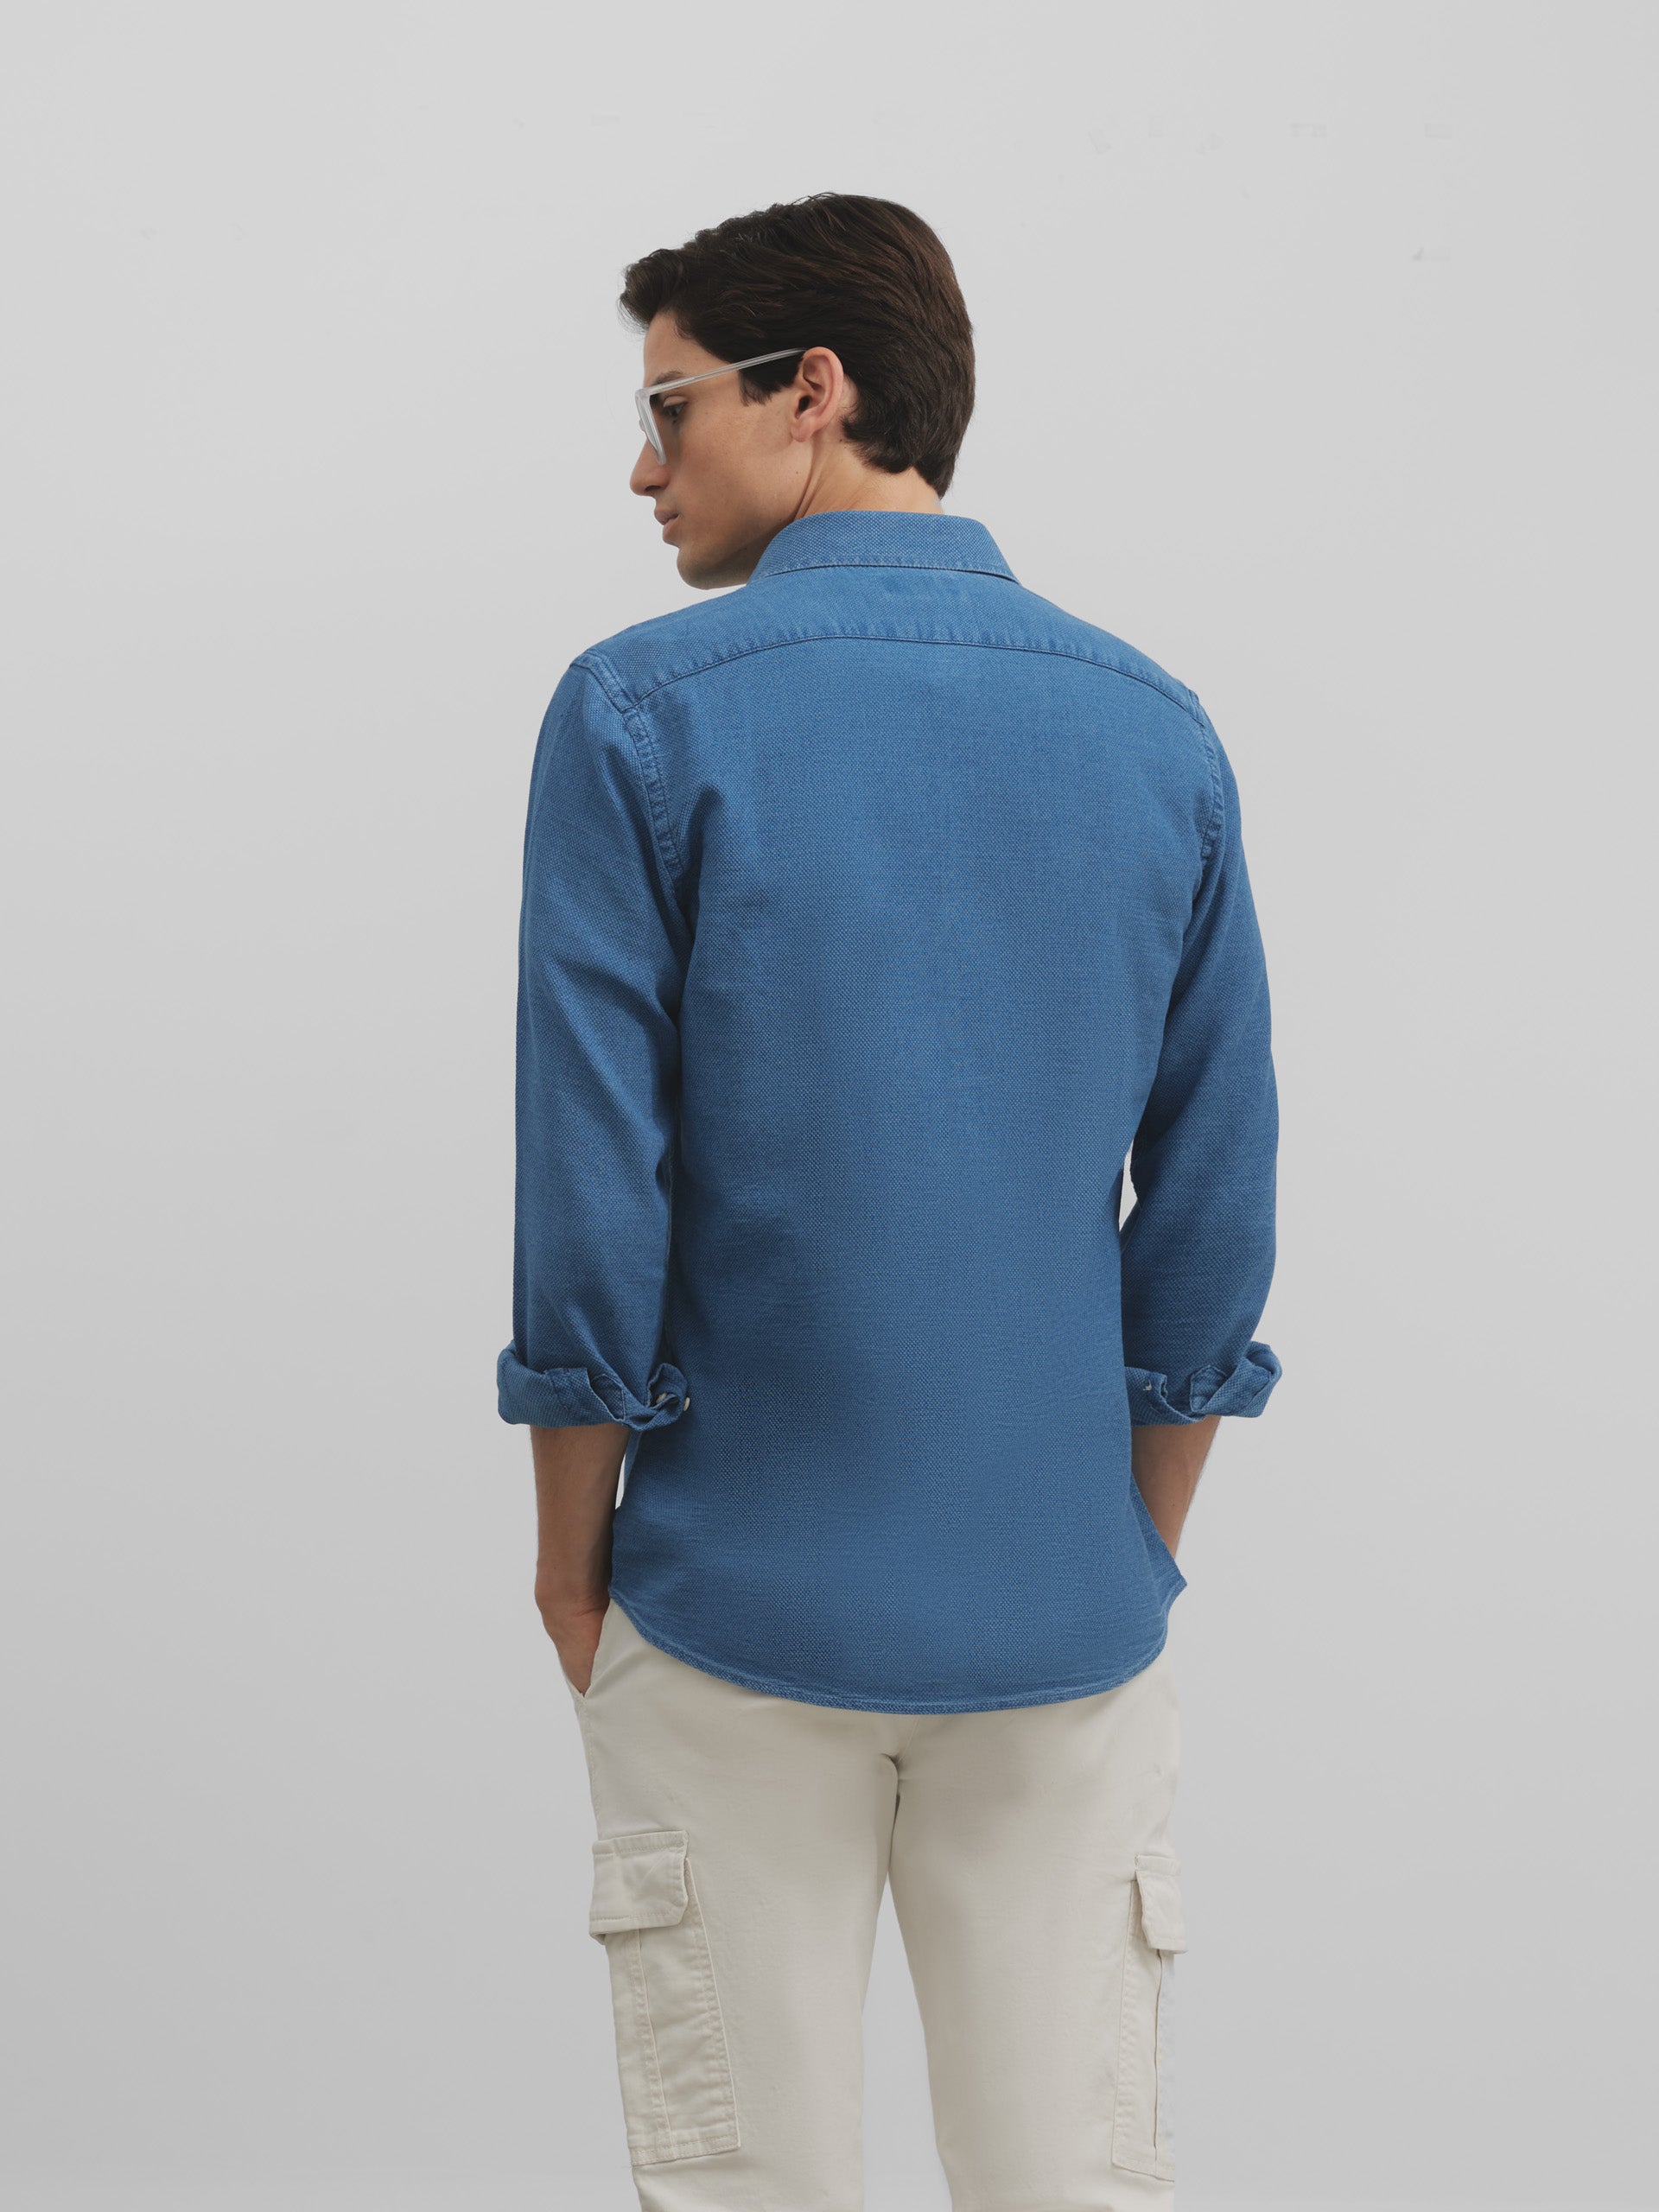 Medium blue denim structured sport shirt